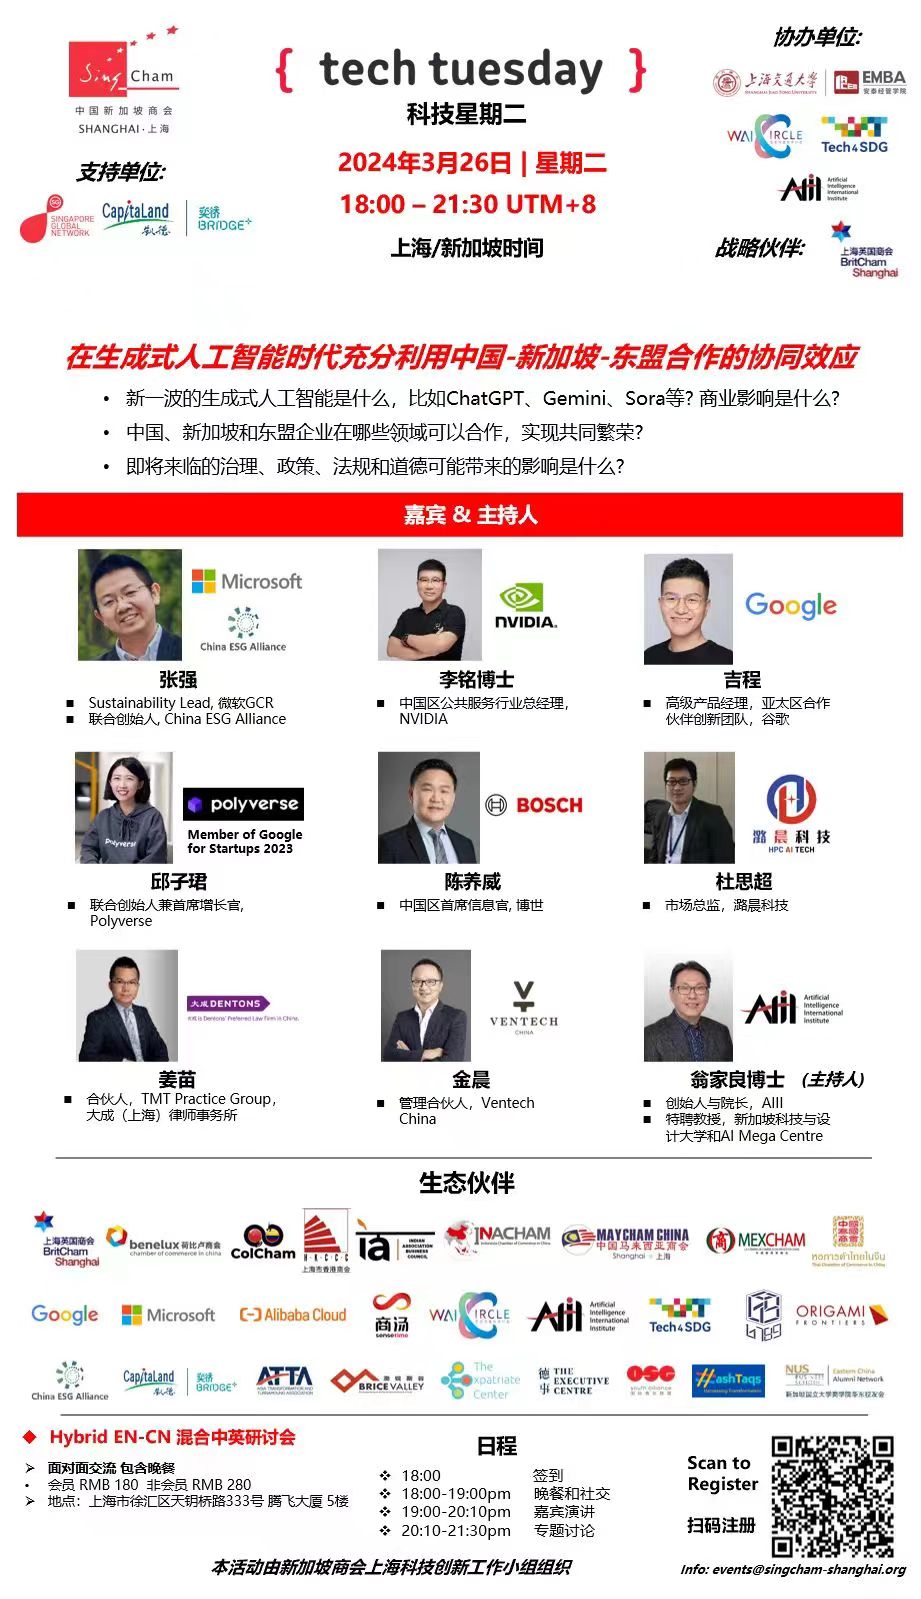 Tech Tuesday in Shanghai (Invitation)